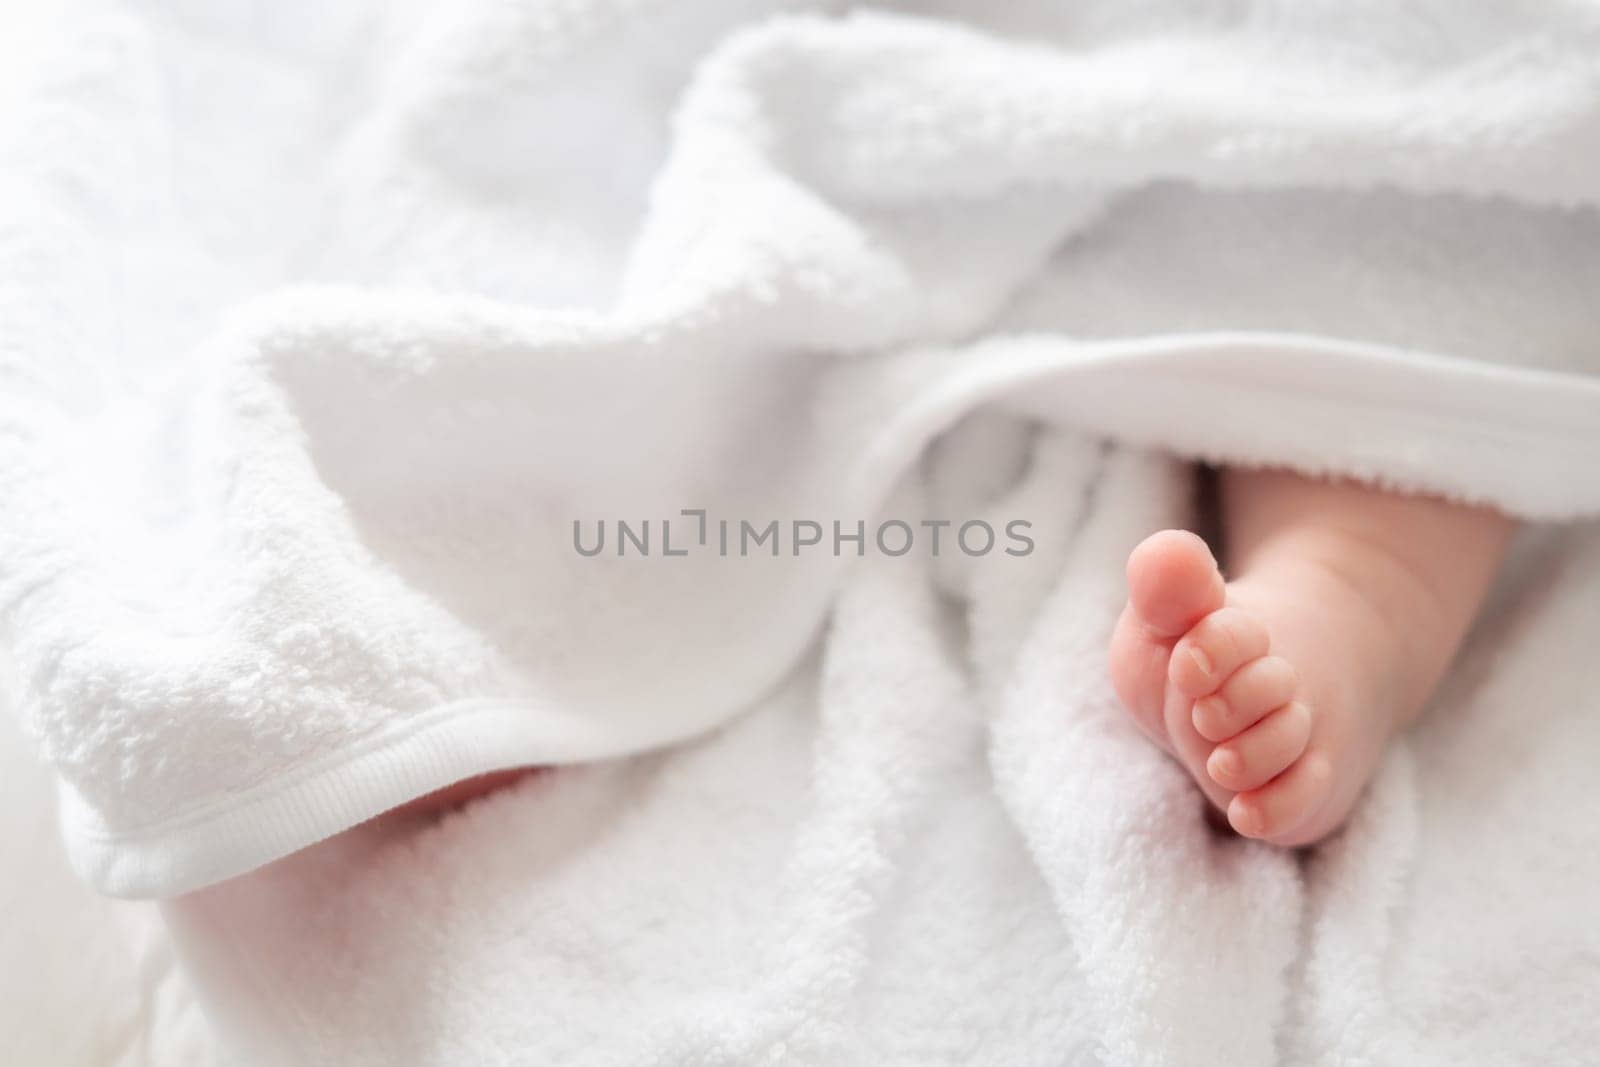 Innocence unveiled: newborn's foot peeking through white softness by Mariakray